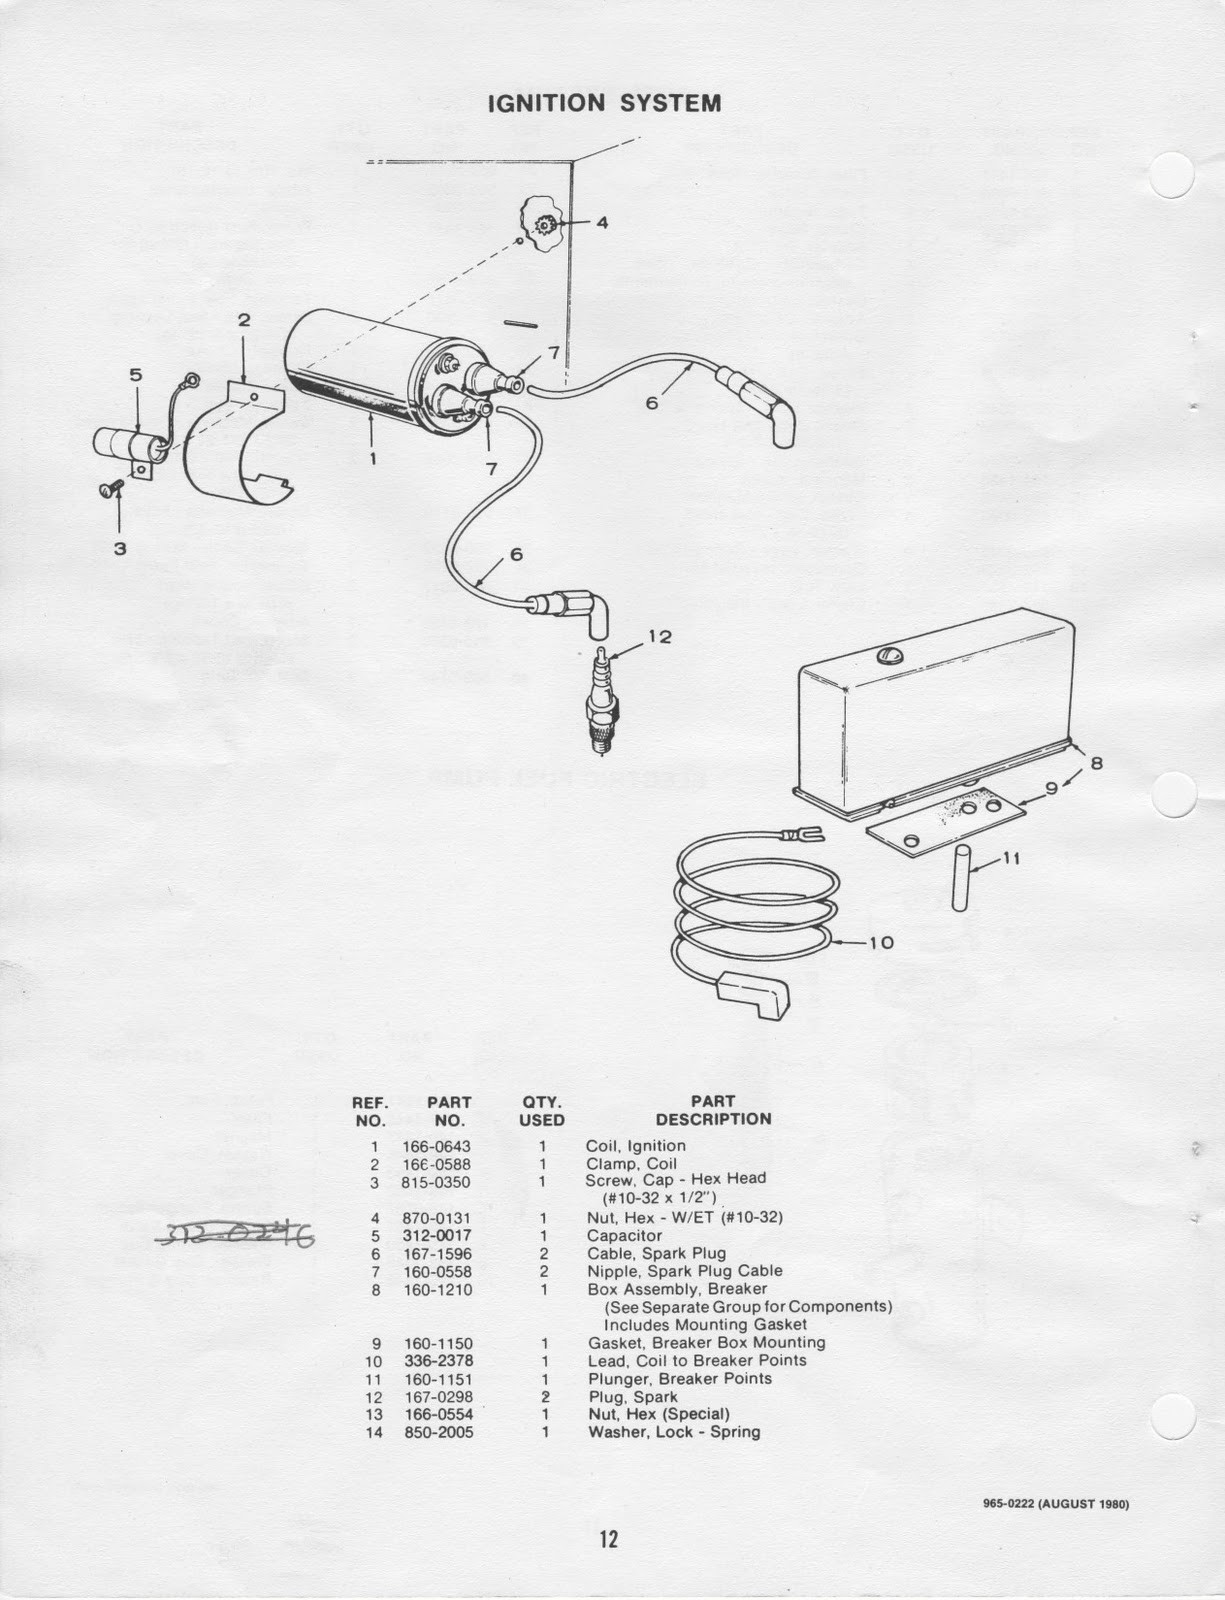 ONAN BFA RV Genset Parts Manual